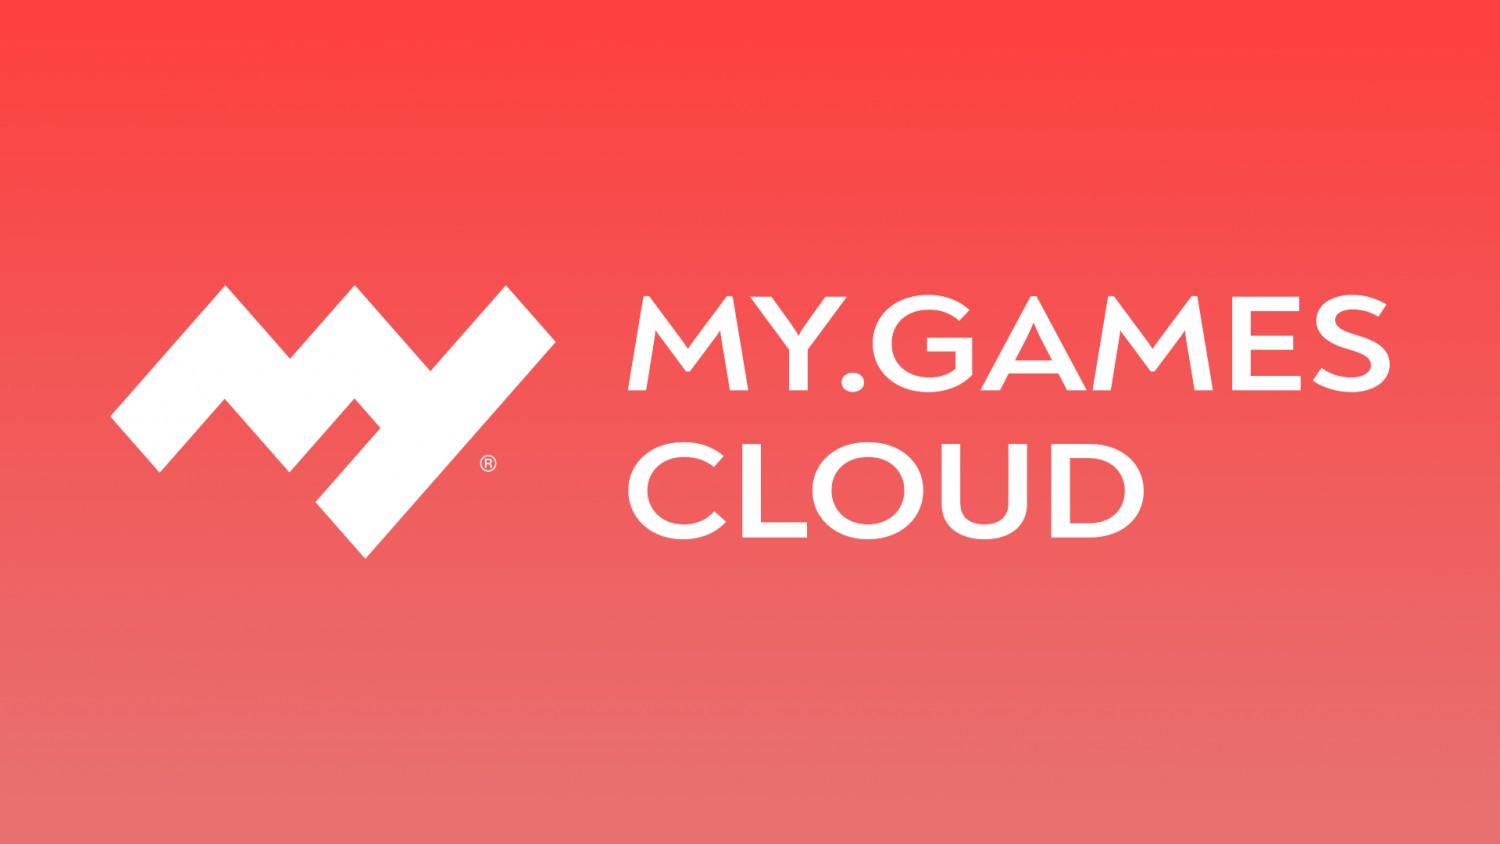 M y game. My games cloud. My games cloud игры. Облачный гейминг майл ру. Гейм облако.